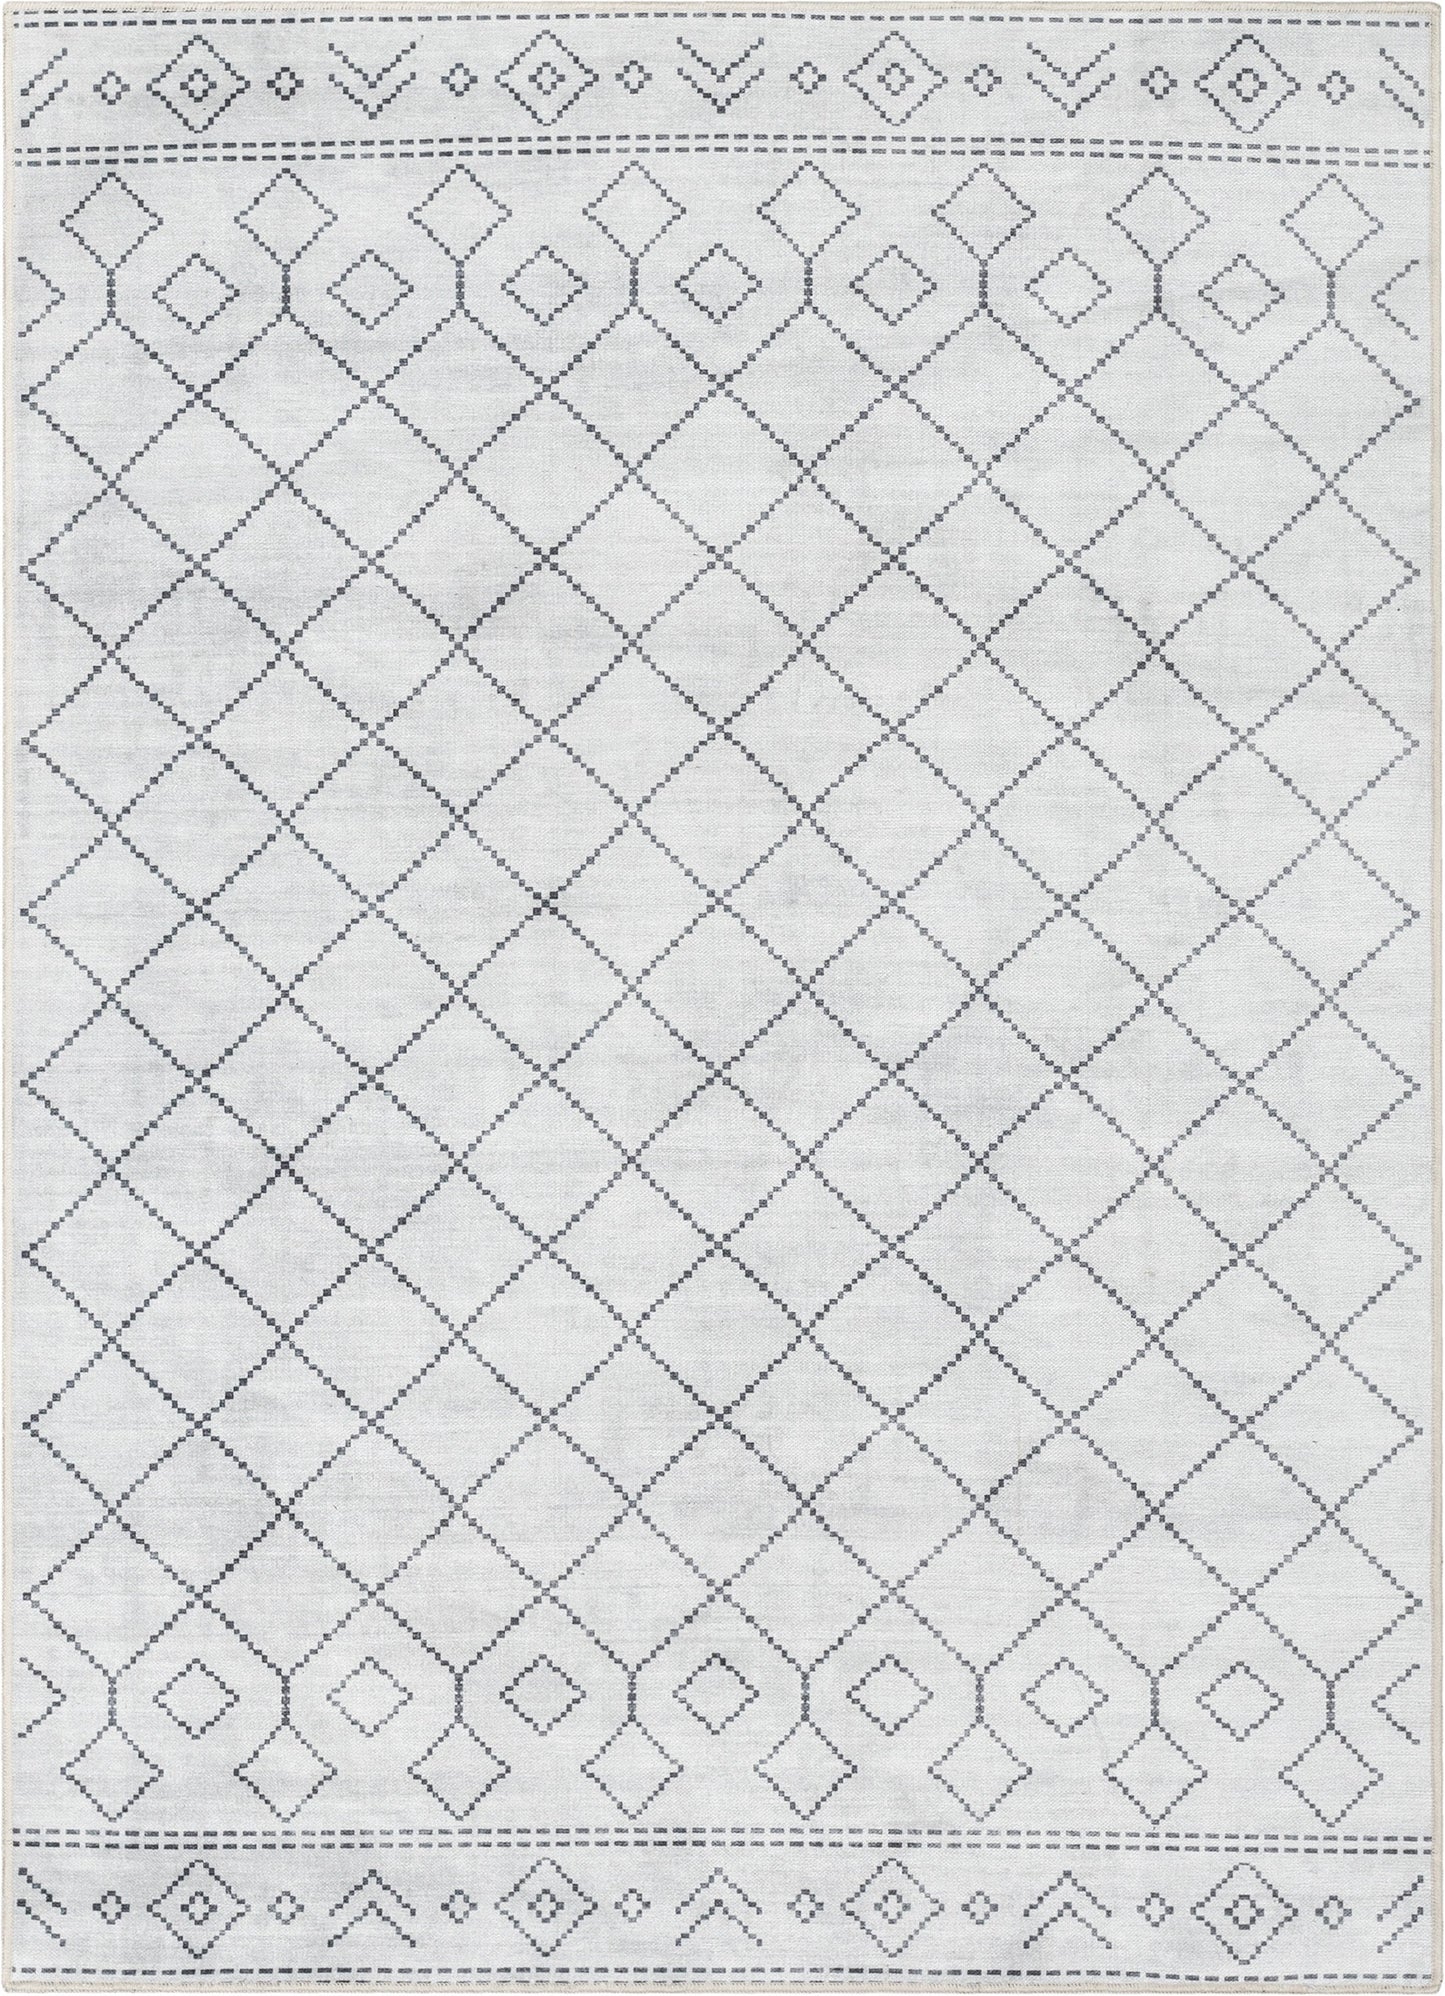 Anastasia Moroccan Trellis Pattern Ivory Grey Flat-Weave Washable Area Rug W-MR-01A